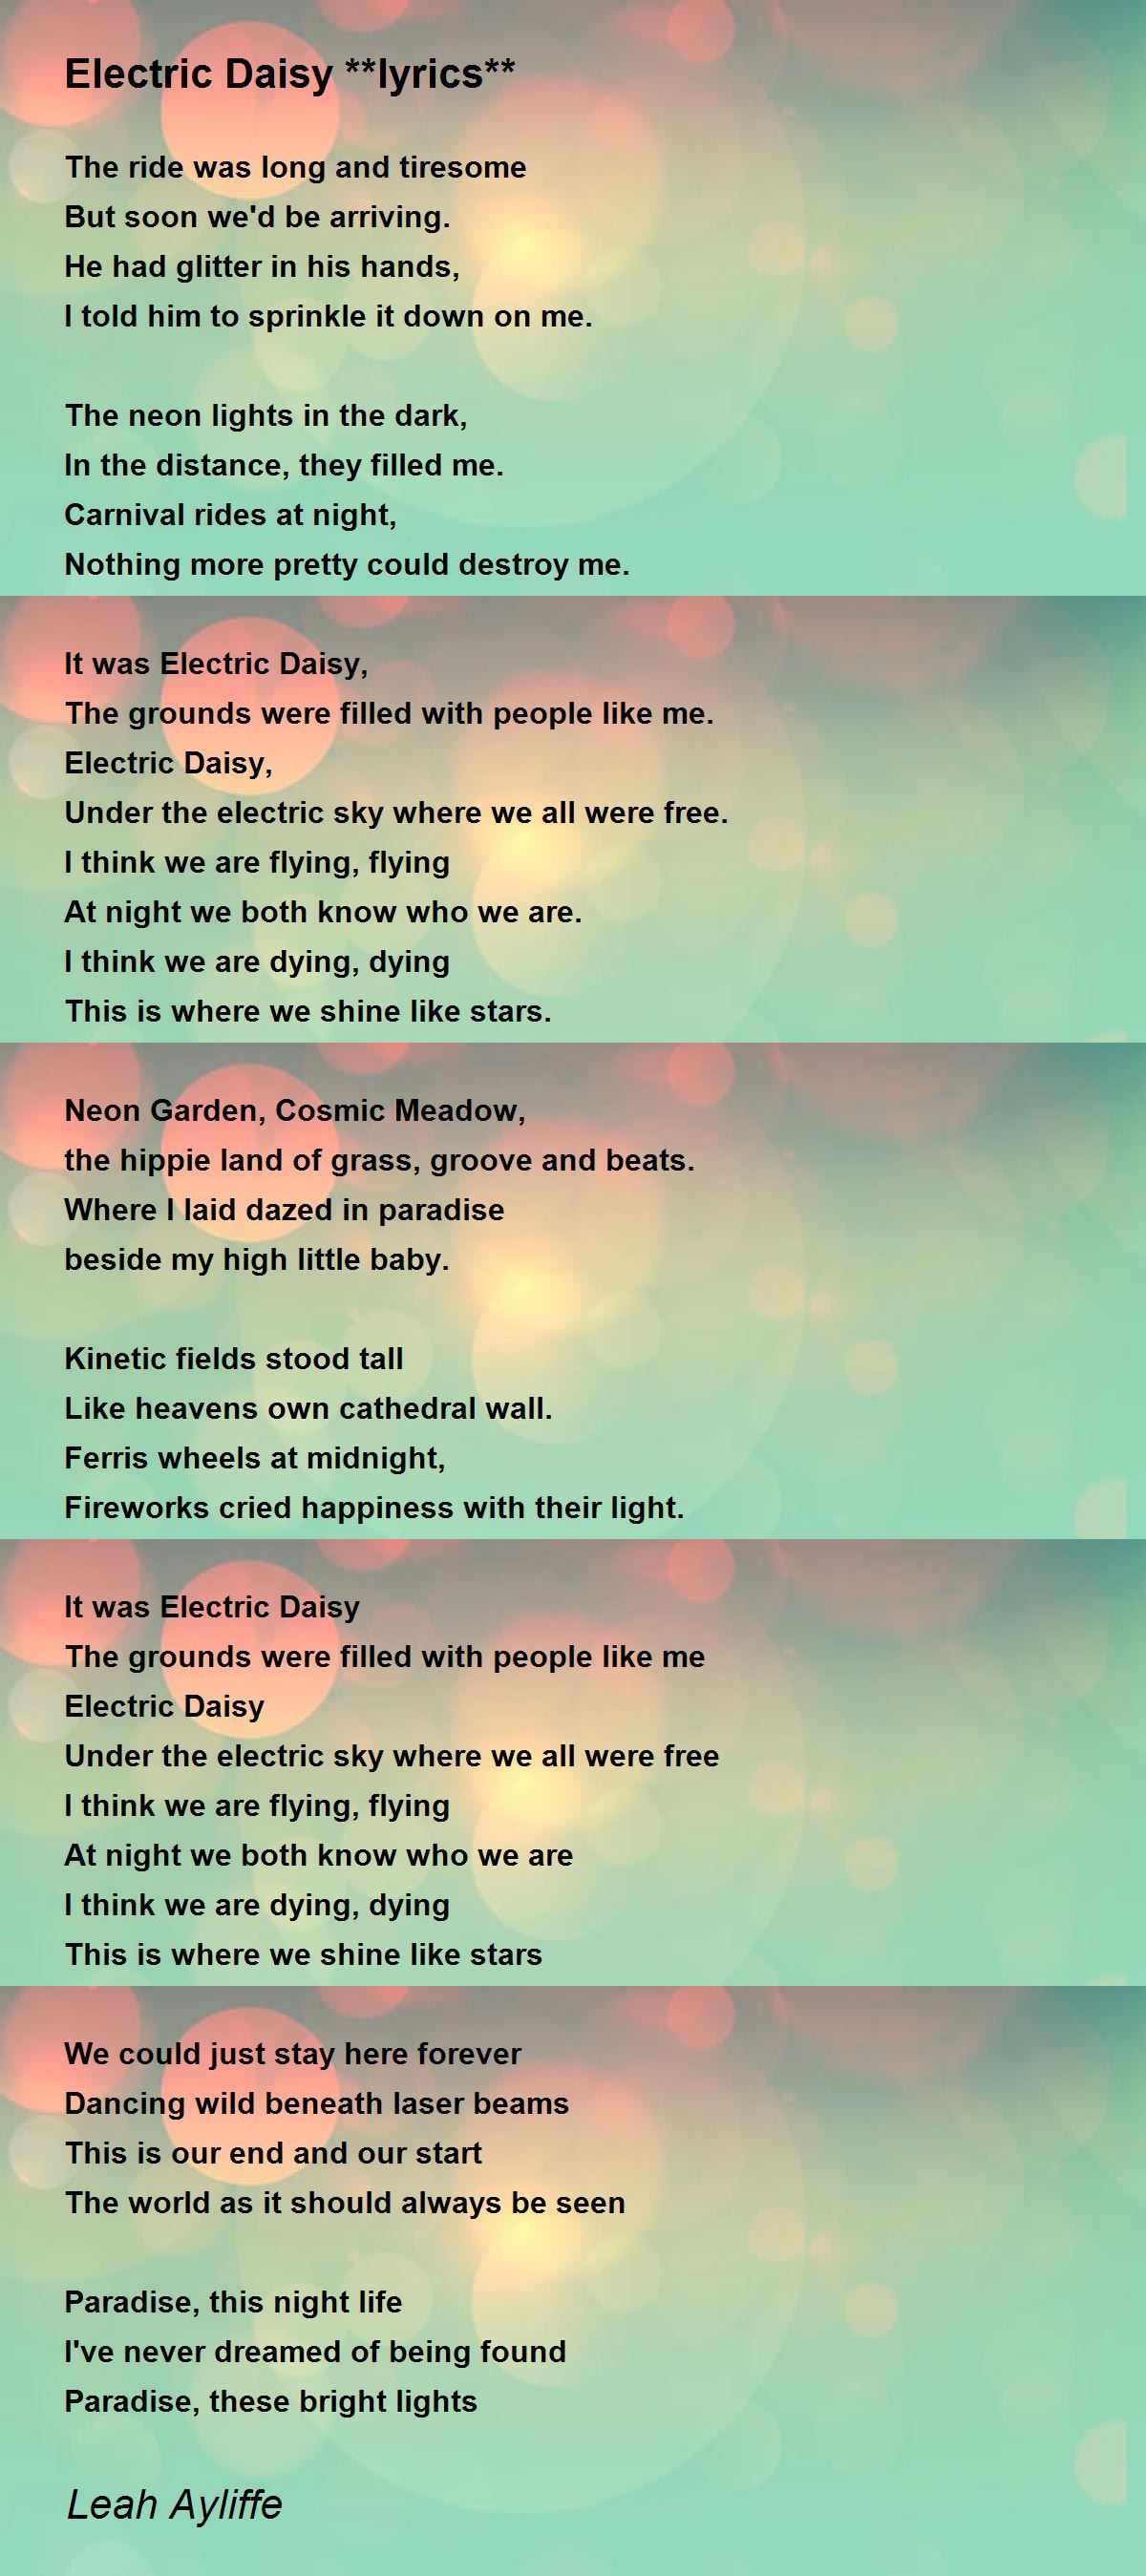 Electric Daisy **lyrics** - Electric Daisy **lyrics** Poem by Leah Ayliffe